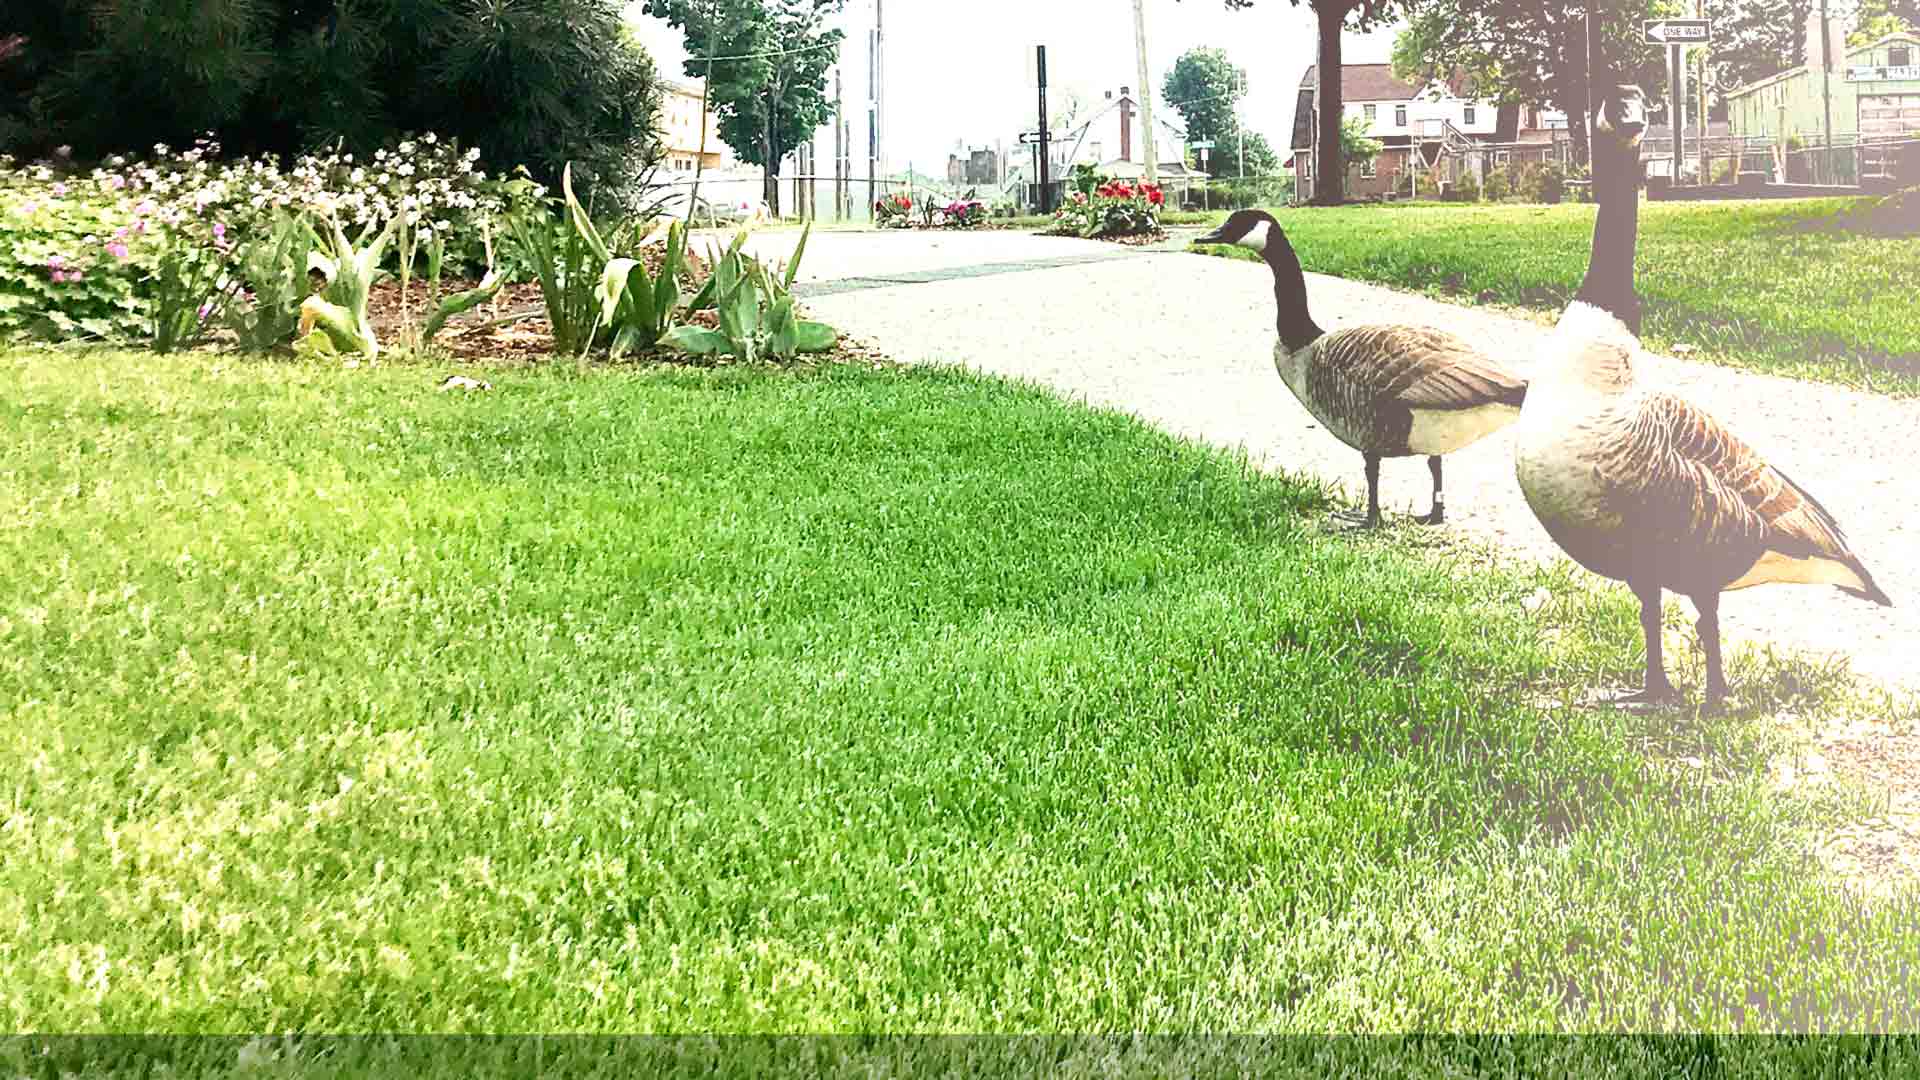 Rule-bending Geese on grass